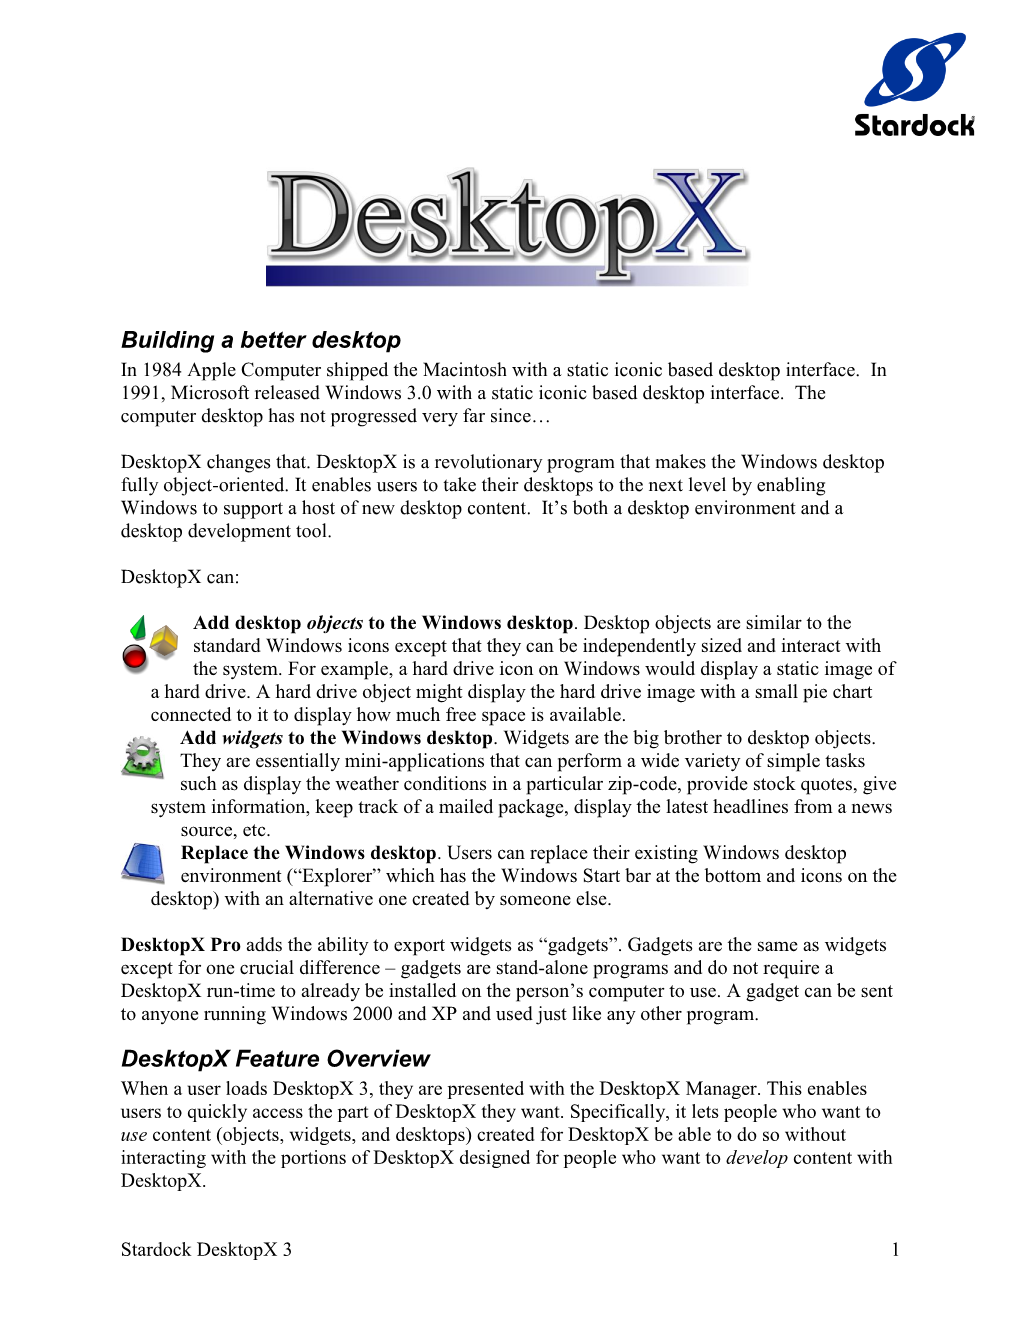 Building a Better Desktop Desktopx Feature Overview